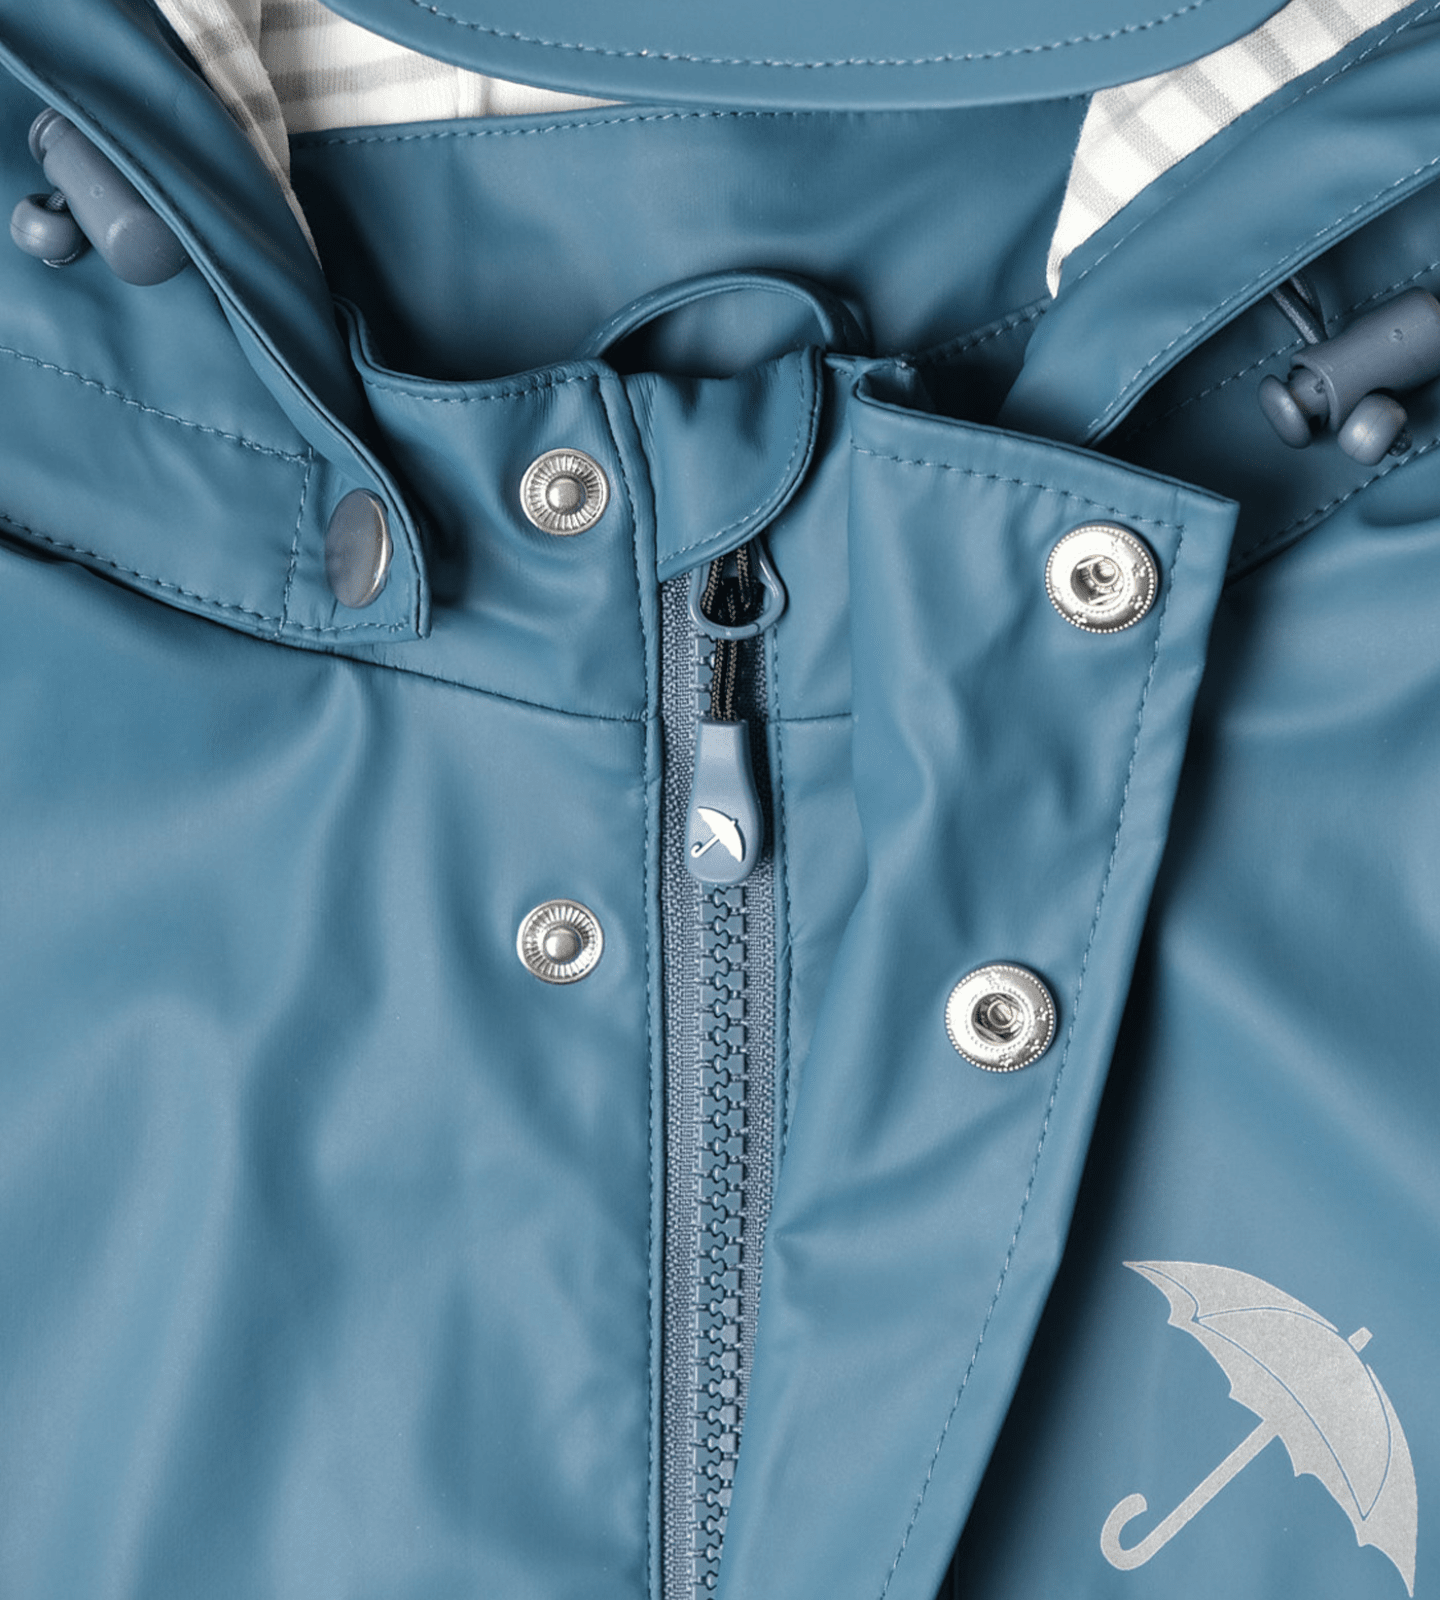 Waterproof Raincoat - Brolly Sheets AU denim